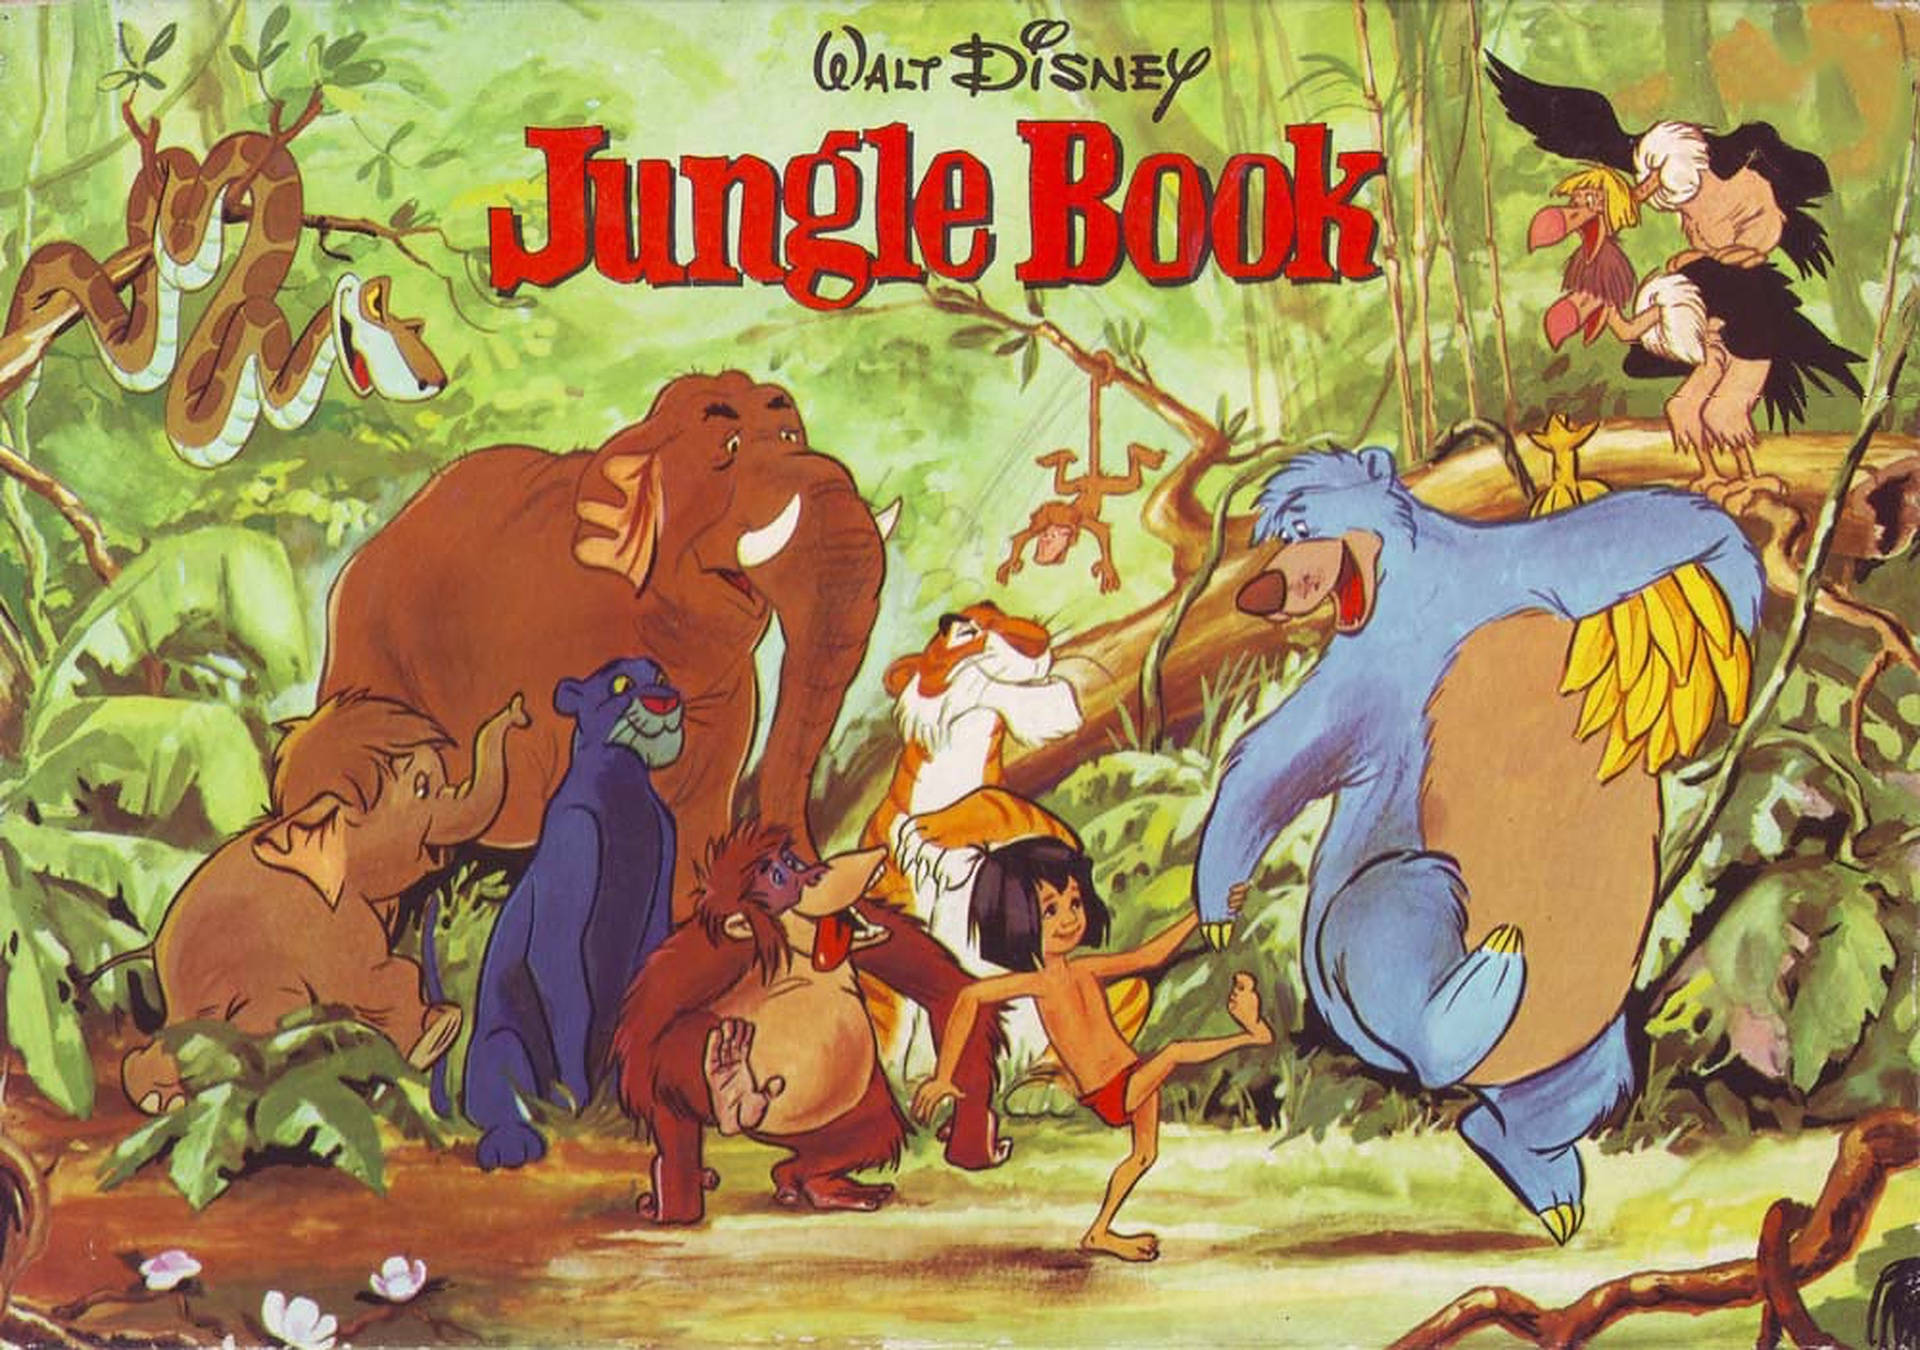 Free The Jungle Book Wallpaper Downloads, [100+] The Jungle Book Wallpapers  for FREE 